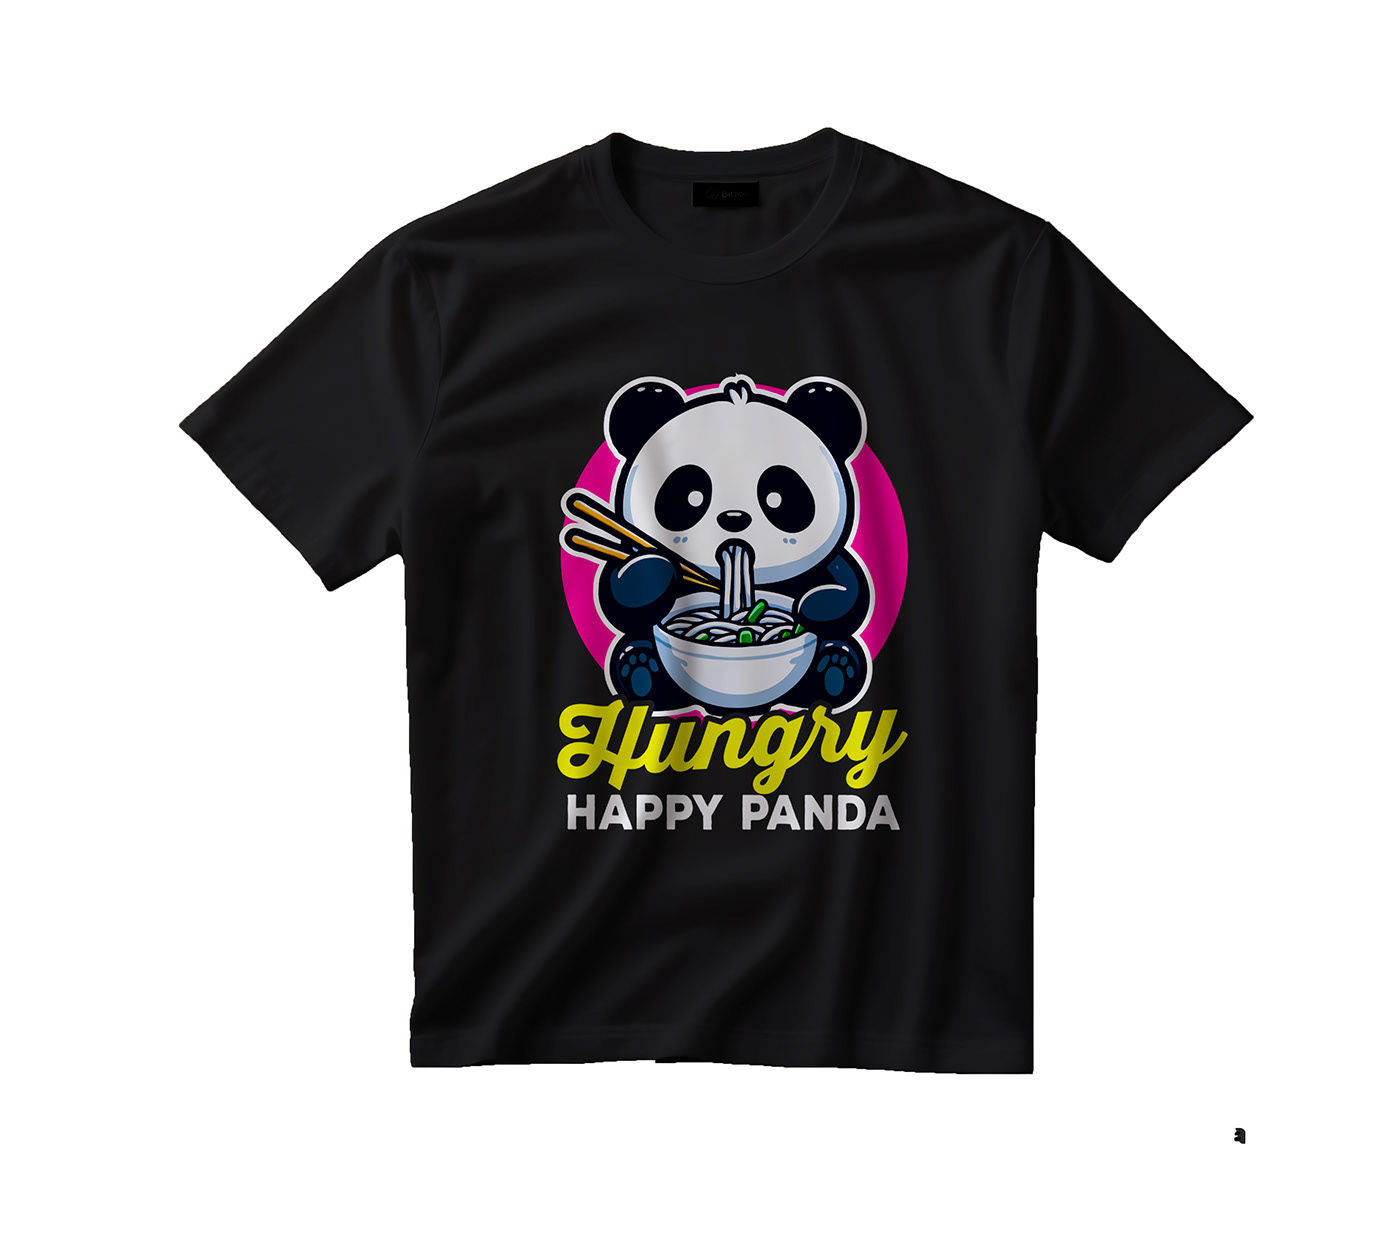 Panda t shirt design